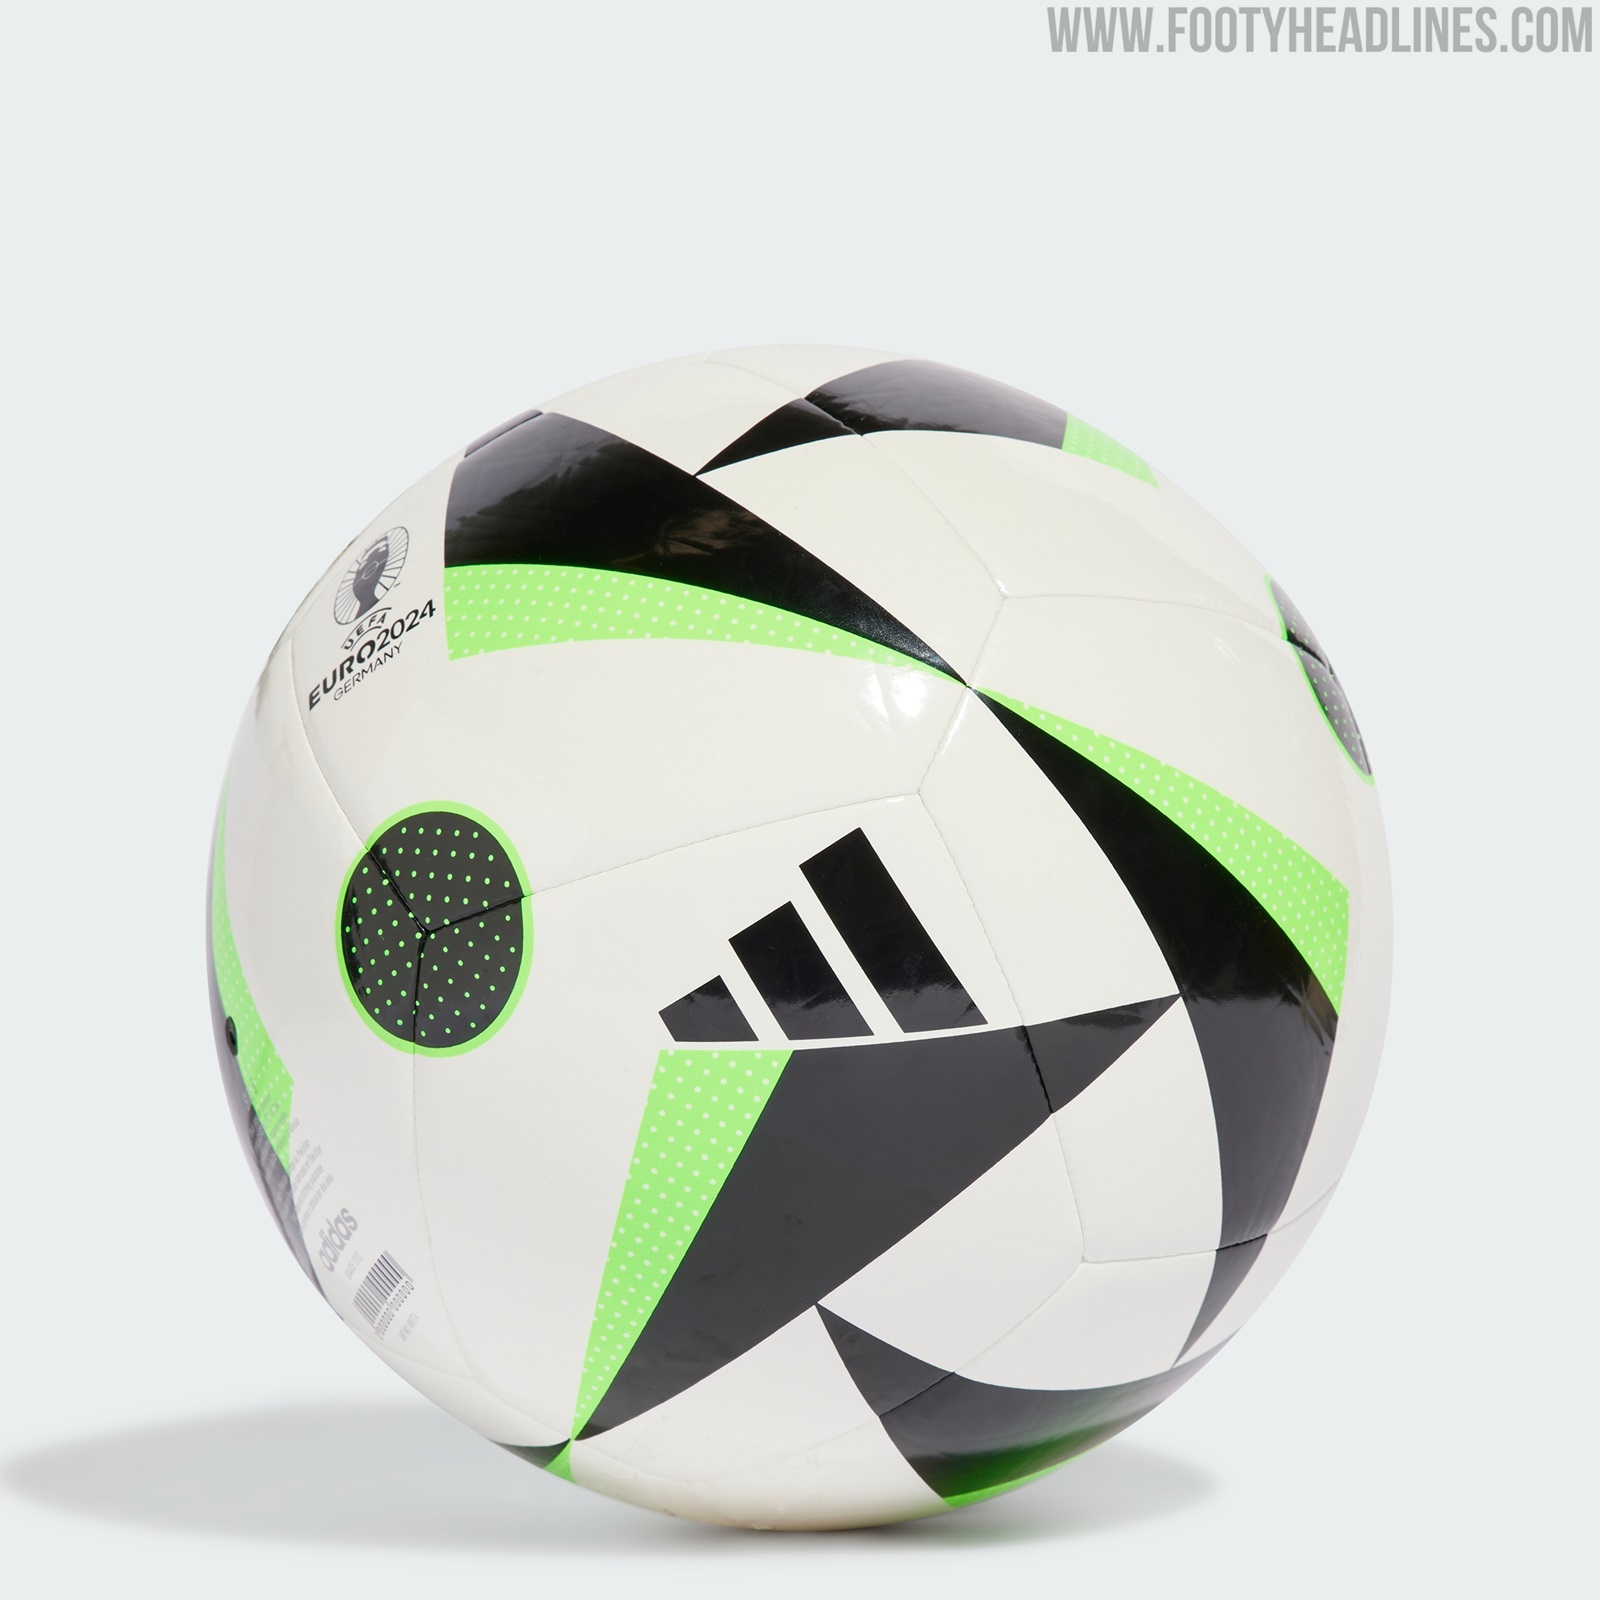 Adidas Révolutionne L'UEFA EURO 2024 Avec FUSSBALLLIEBE, Le Ballon